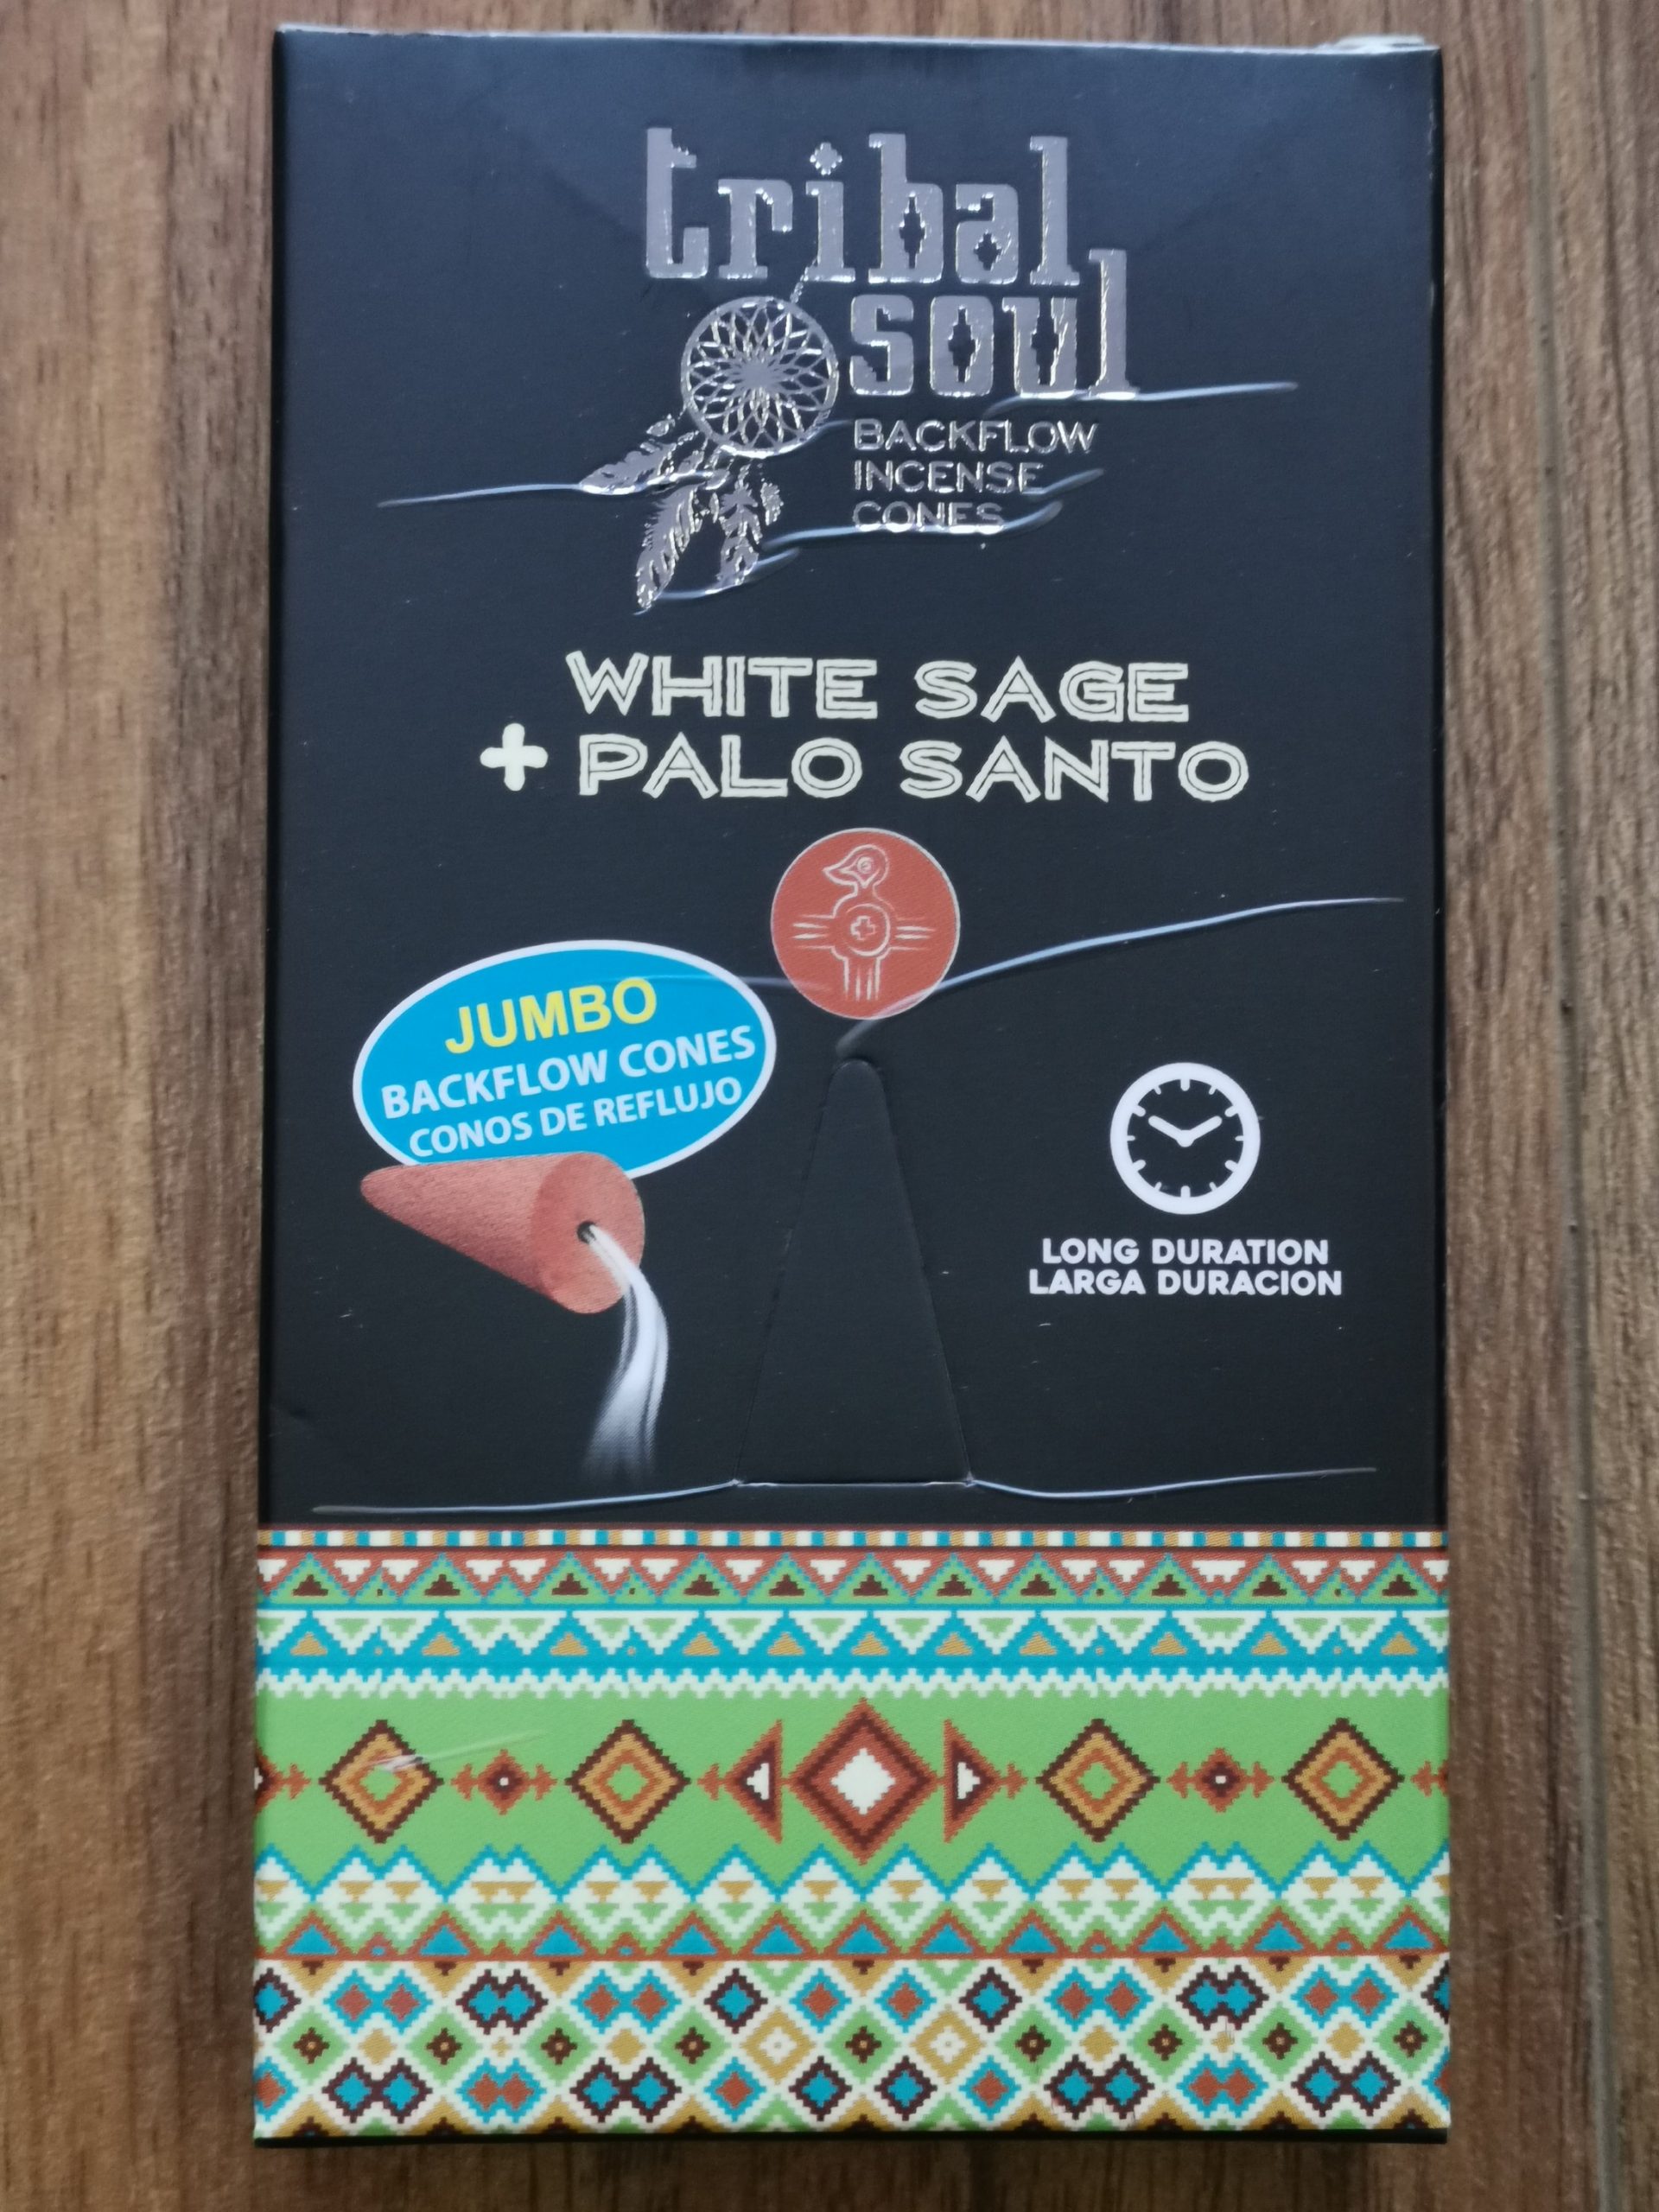 10 Cones Tribal Soul Backflow Incesne Palo Santo White Sage